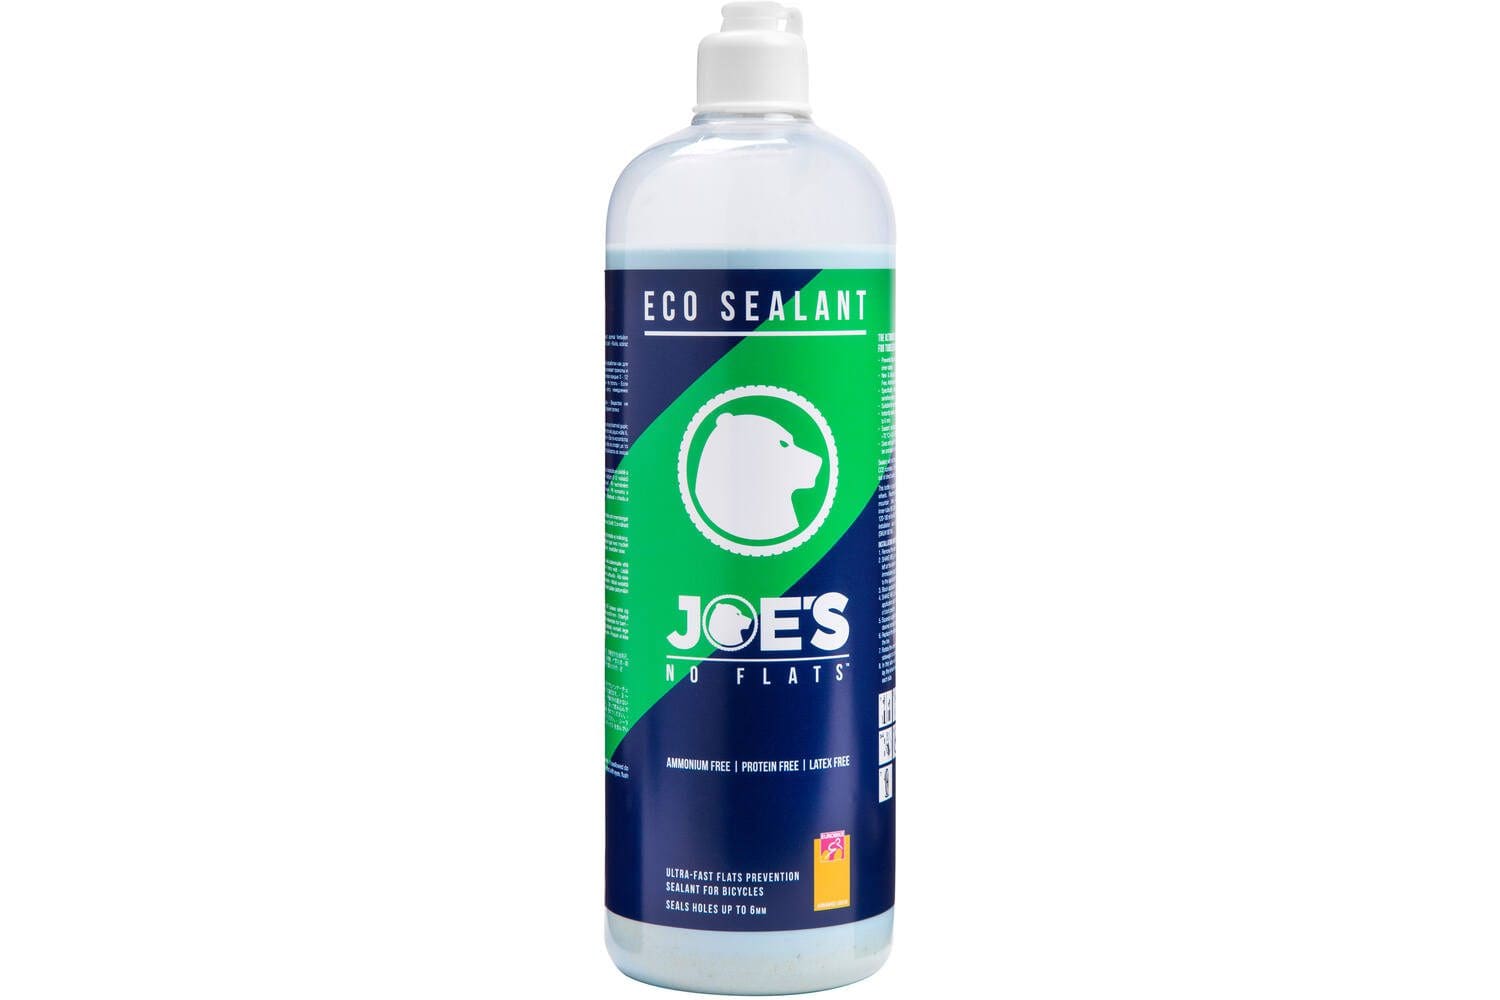 Joe’s No Flats – Eco Sealant 1000ML